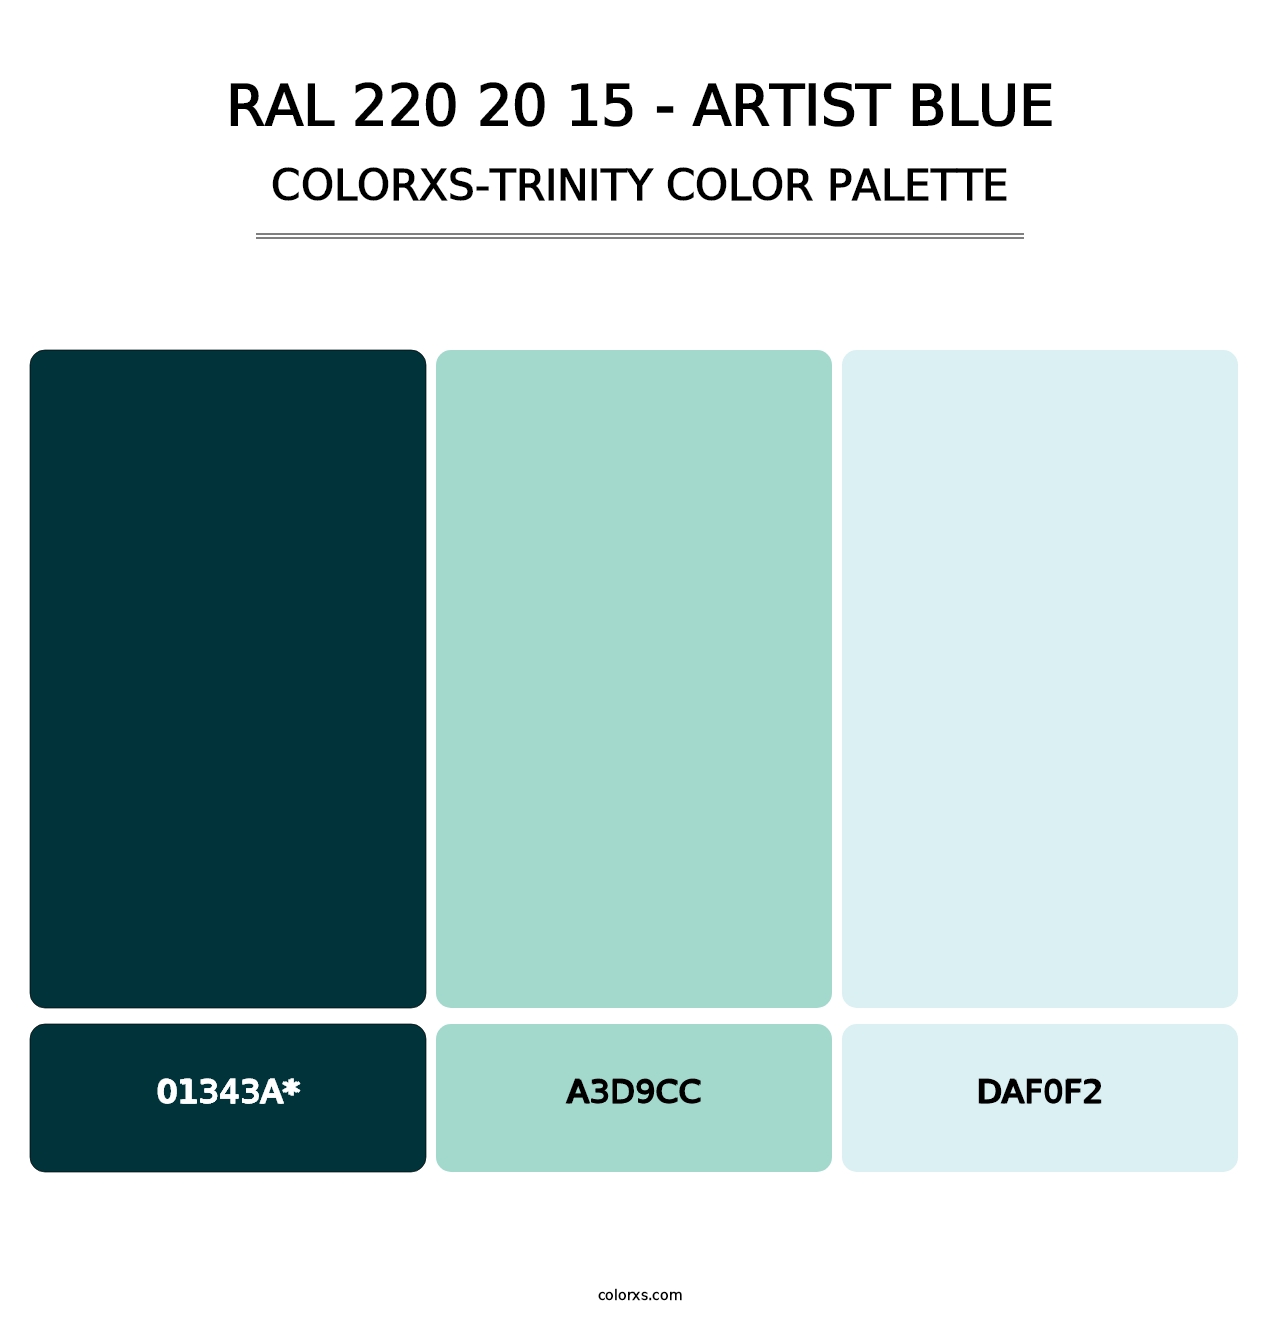 RAL 220 20 15 - Artist Blue - Colorxs Trinity Palette